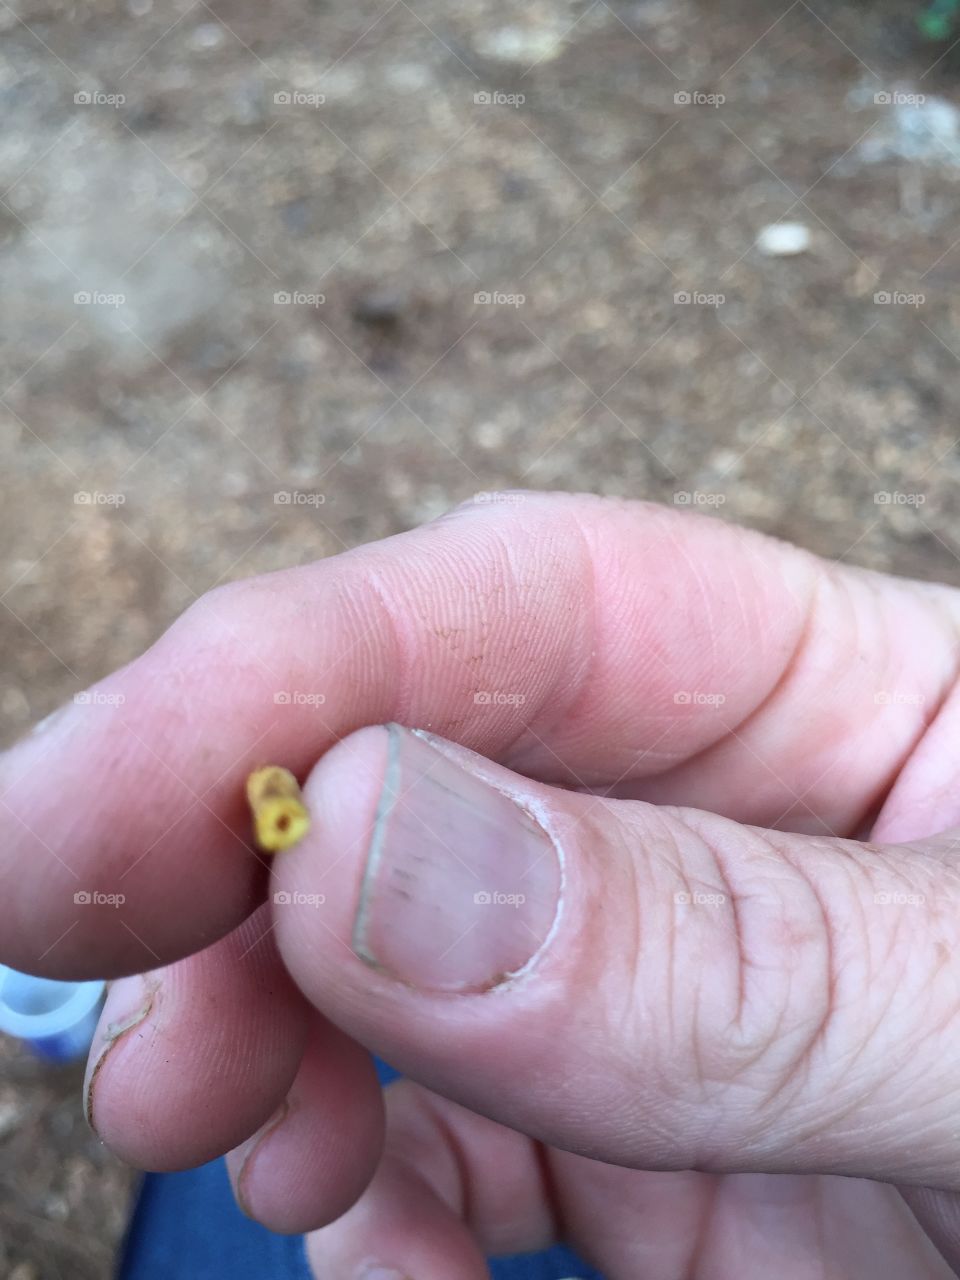 Tiny yellow stem of a mushroom found in mulch beneath an oak tree in Northeast GA